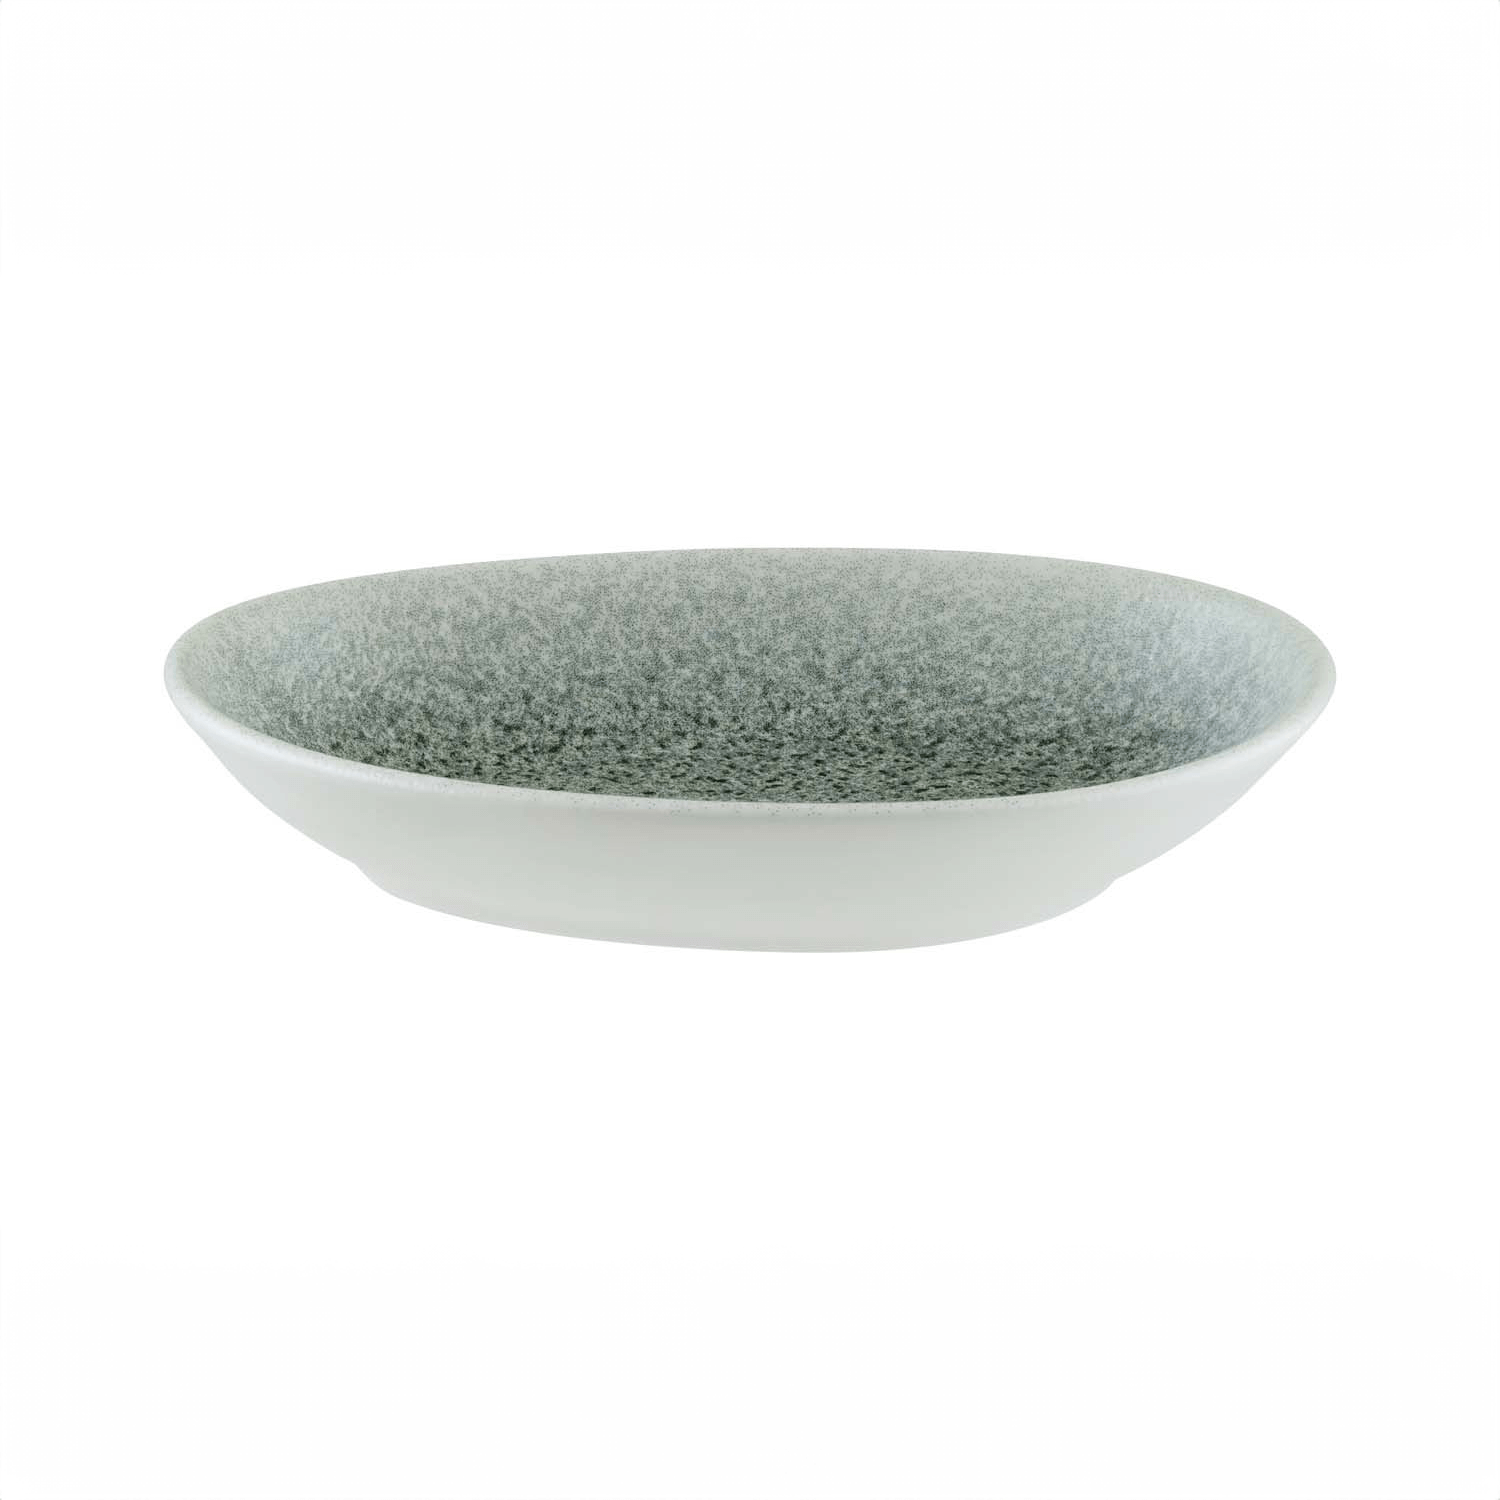 Luca Ocean Vago Oval Dish 15cm